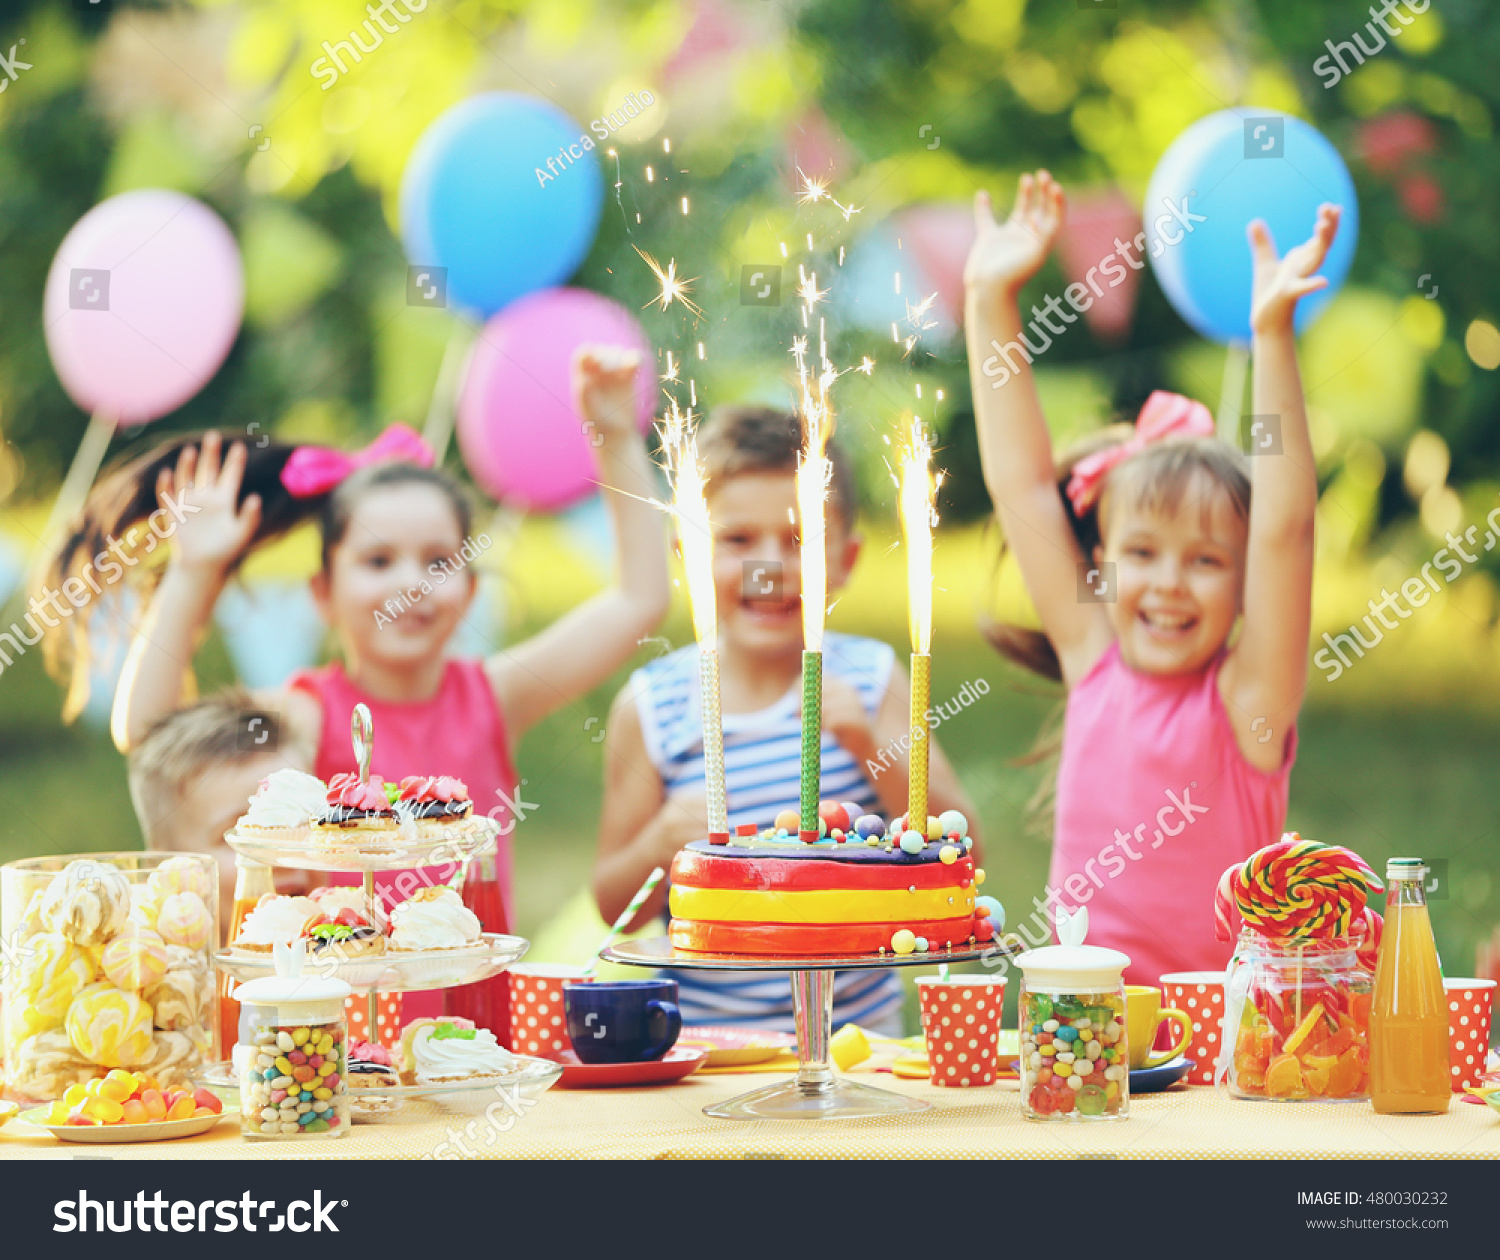 Children celebrating birthday in park #480030232